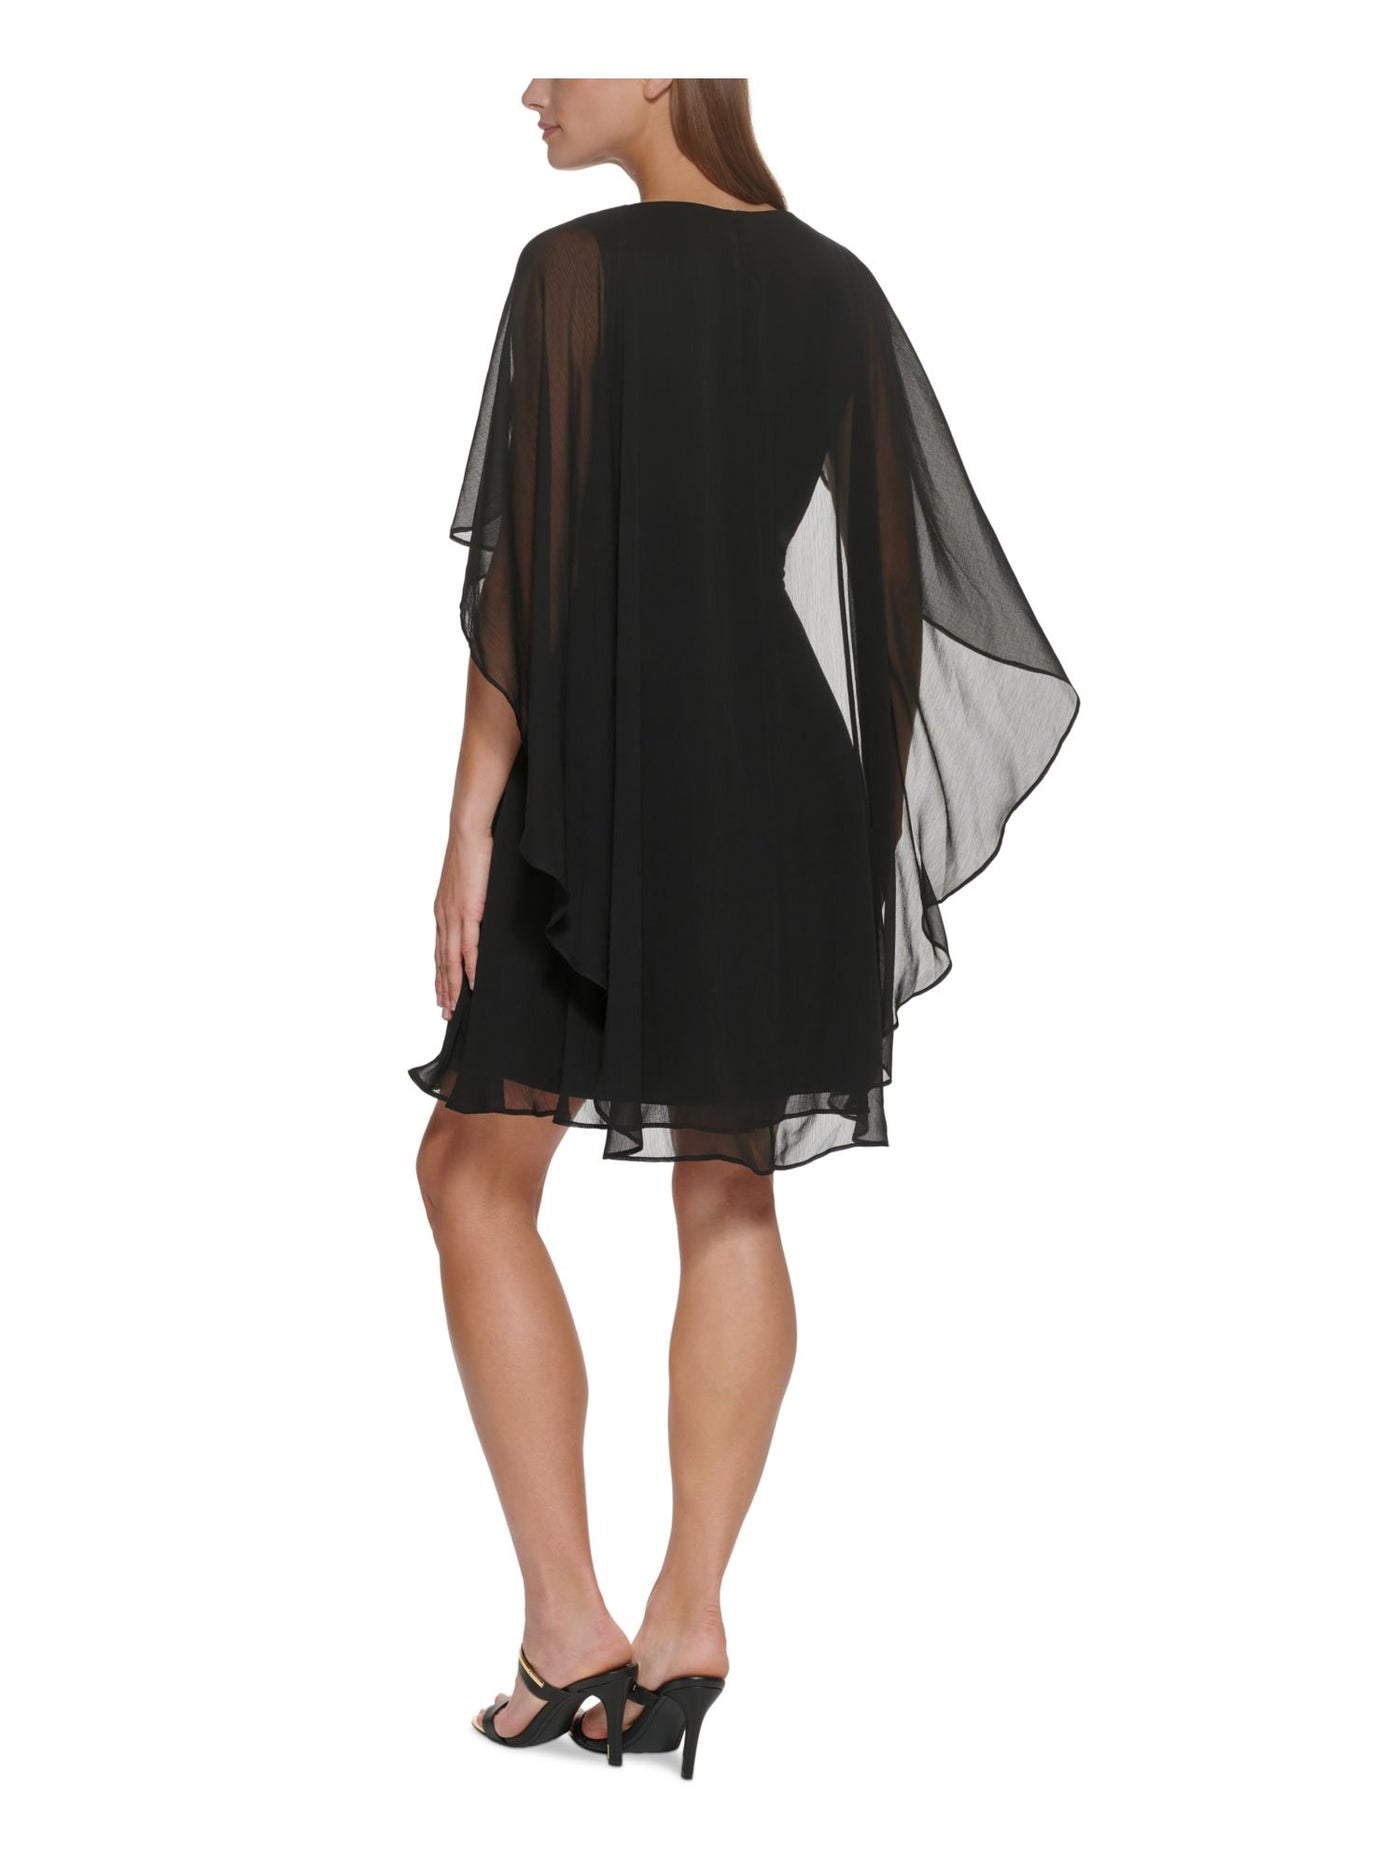 DKNY Womens Black Sleeveless V Neck Above The Knee Formal Fit + Flare Dress 4